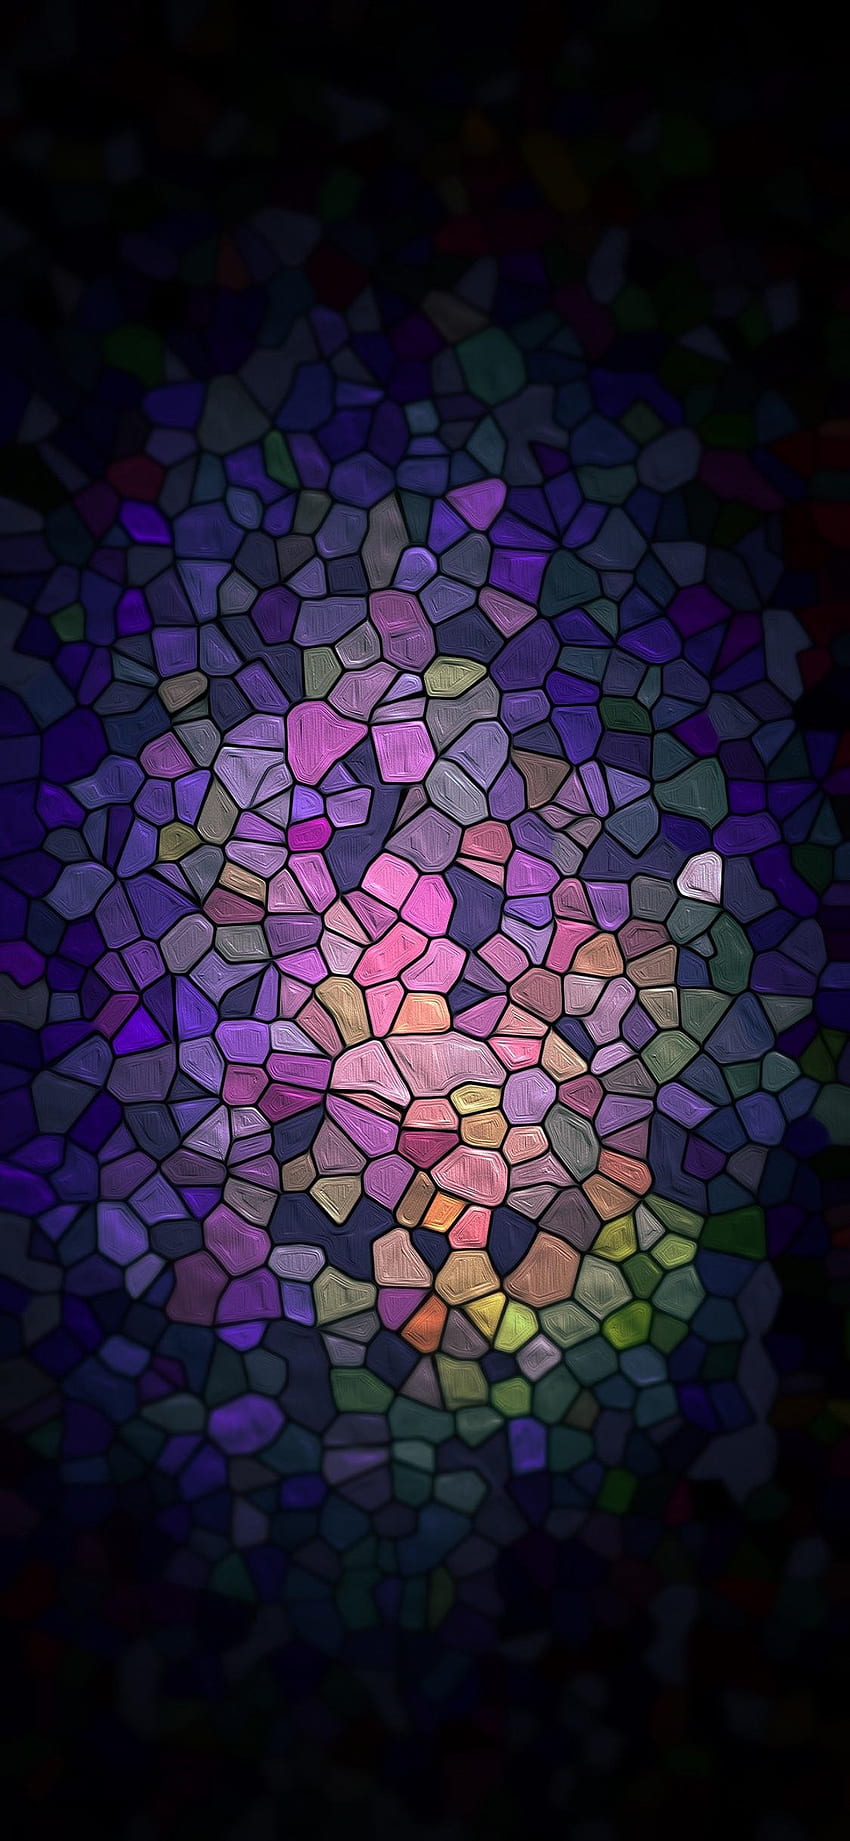 Colorful iPhone Wallpapers  PixelsTalkNet